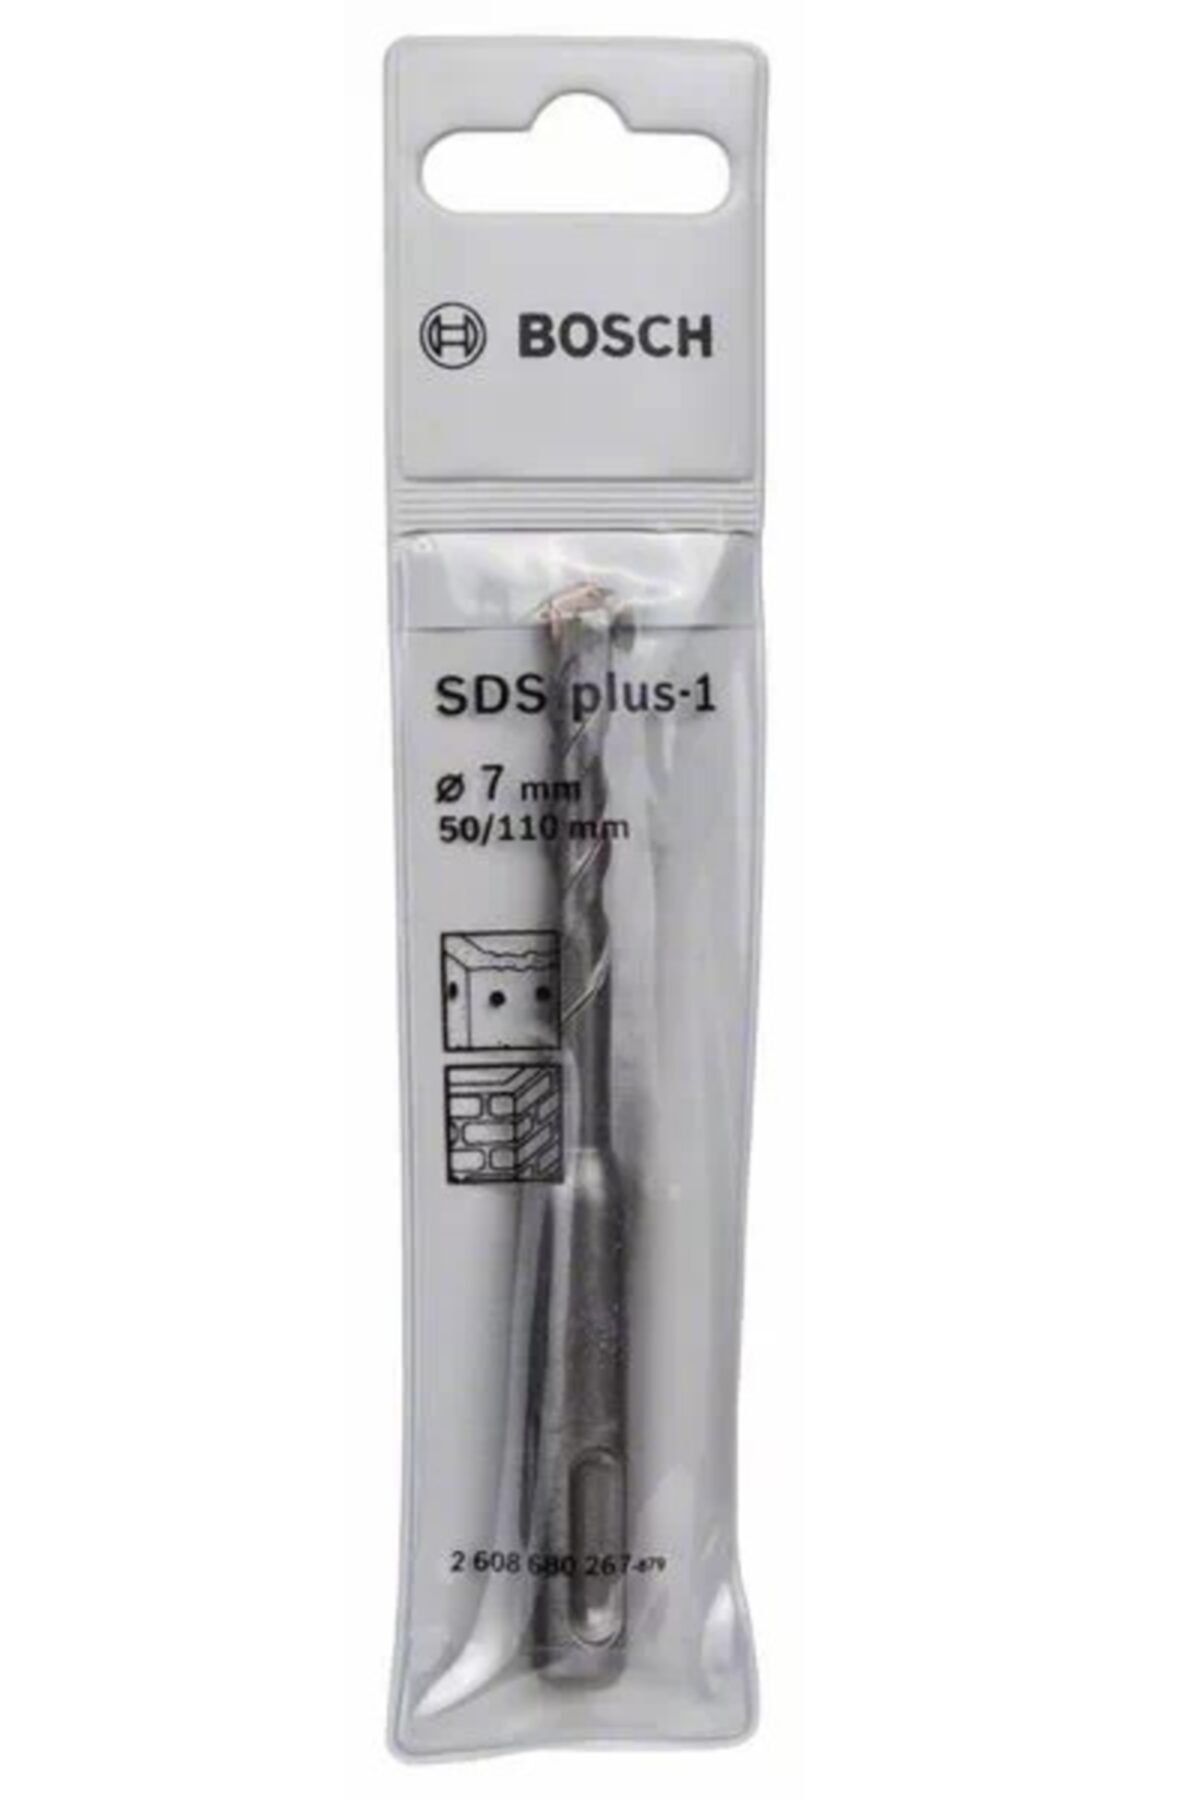 Bosch Sds Plus-1 Beton Delme Ucu 7 Mm 50/110 2608680267